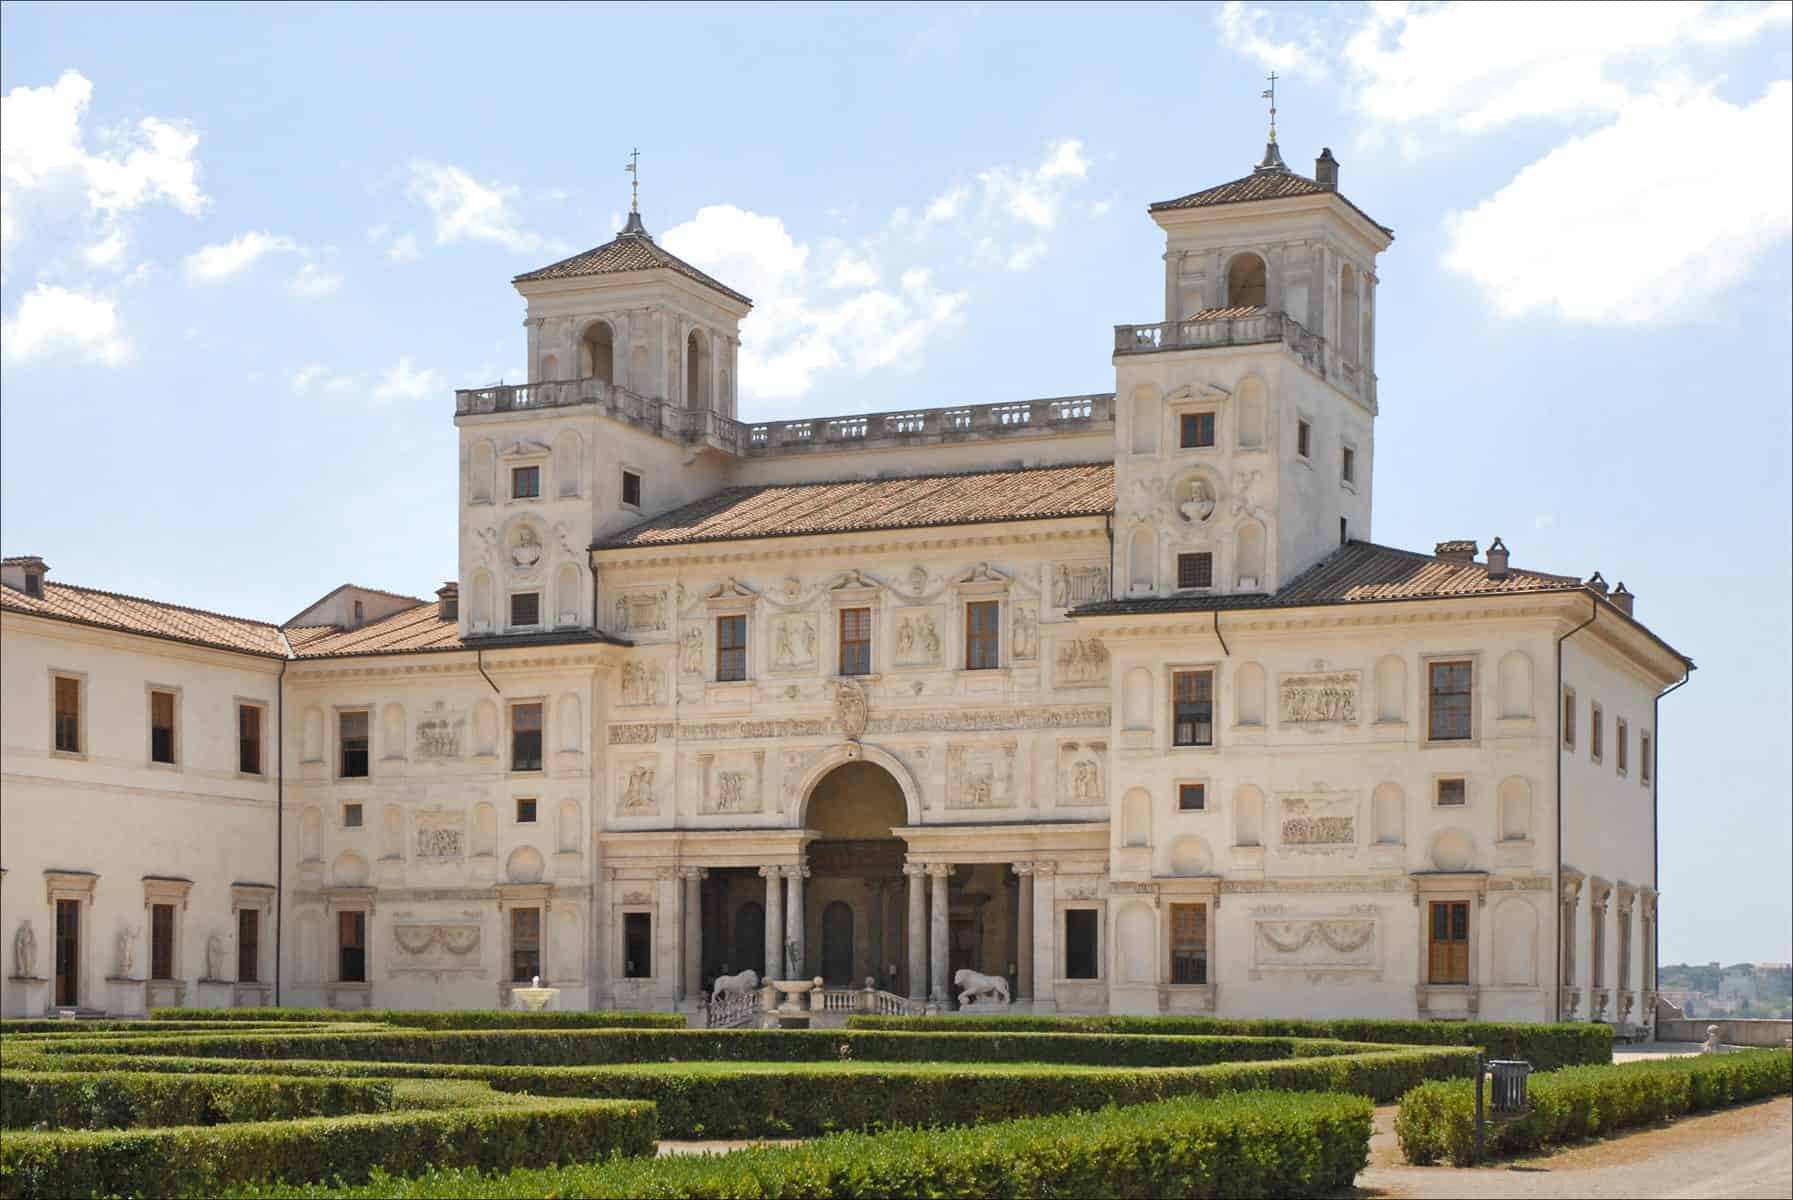 Villa Medici